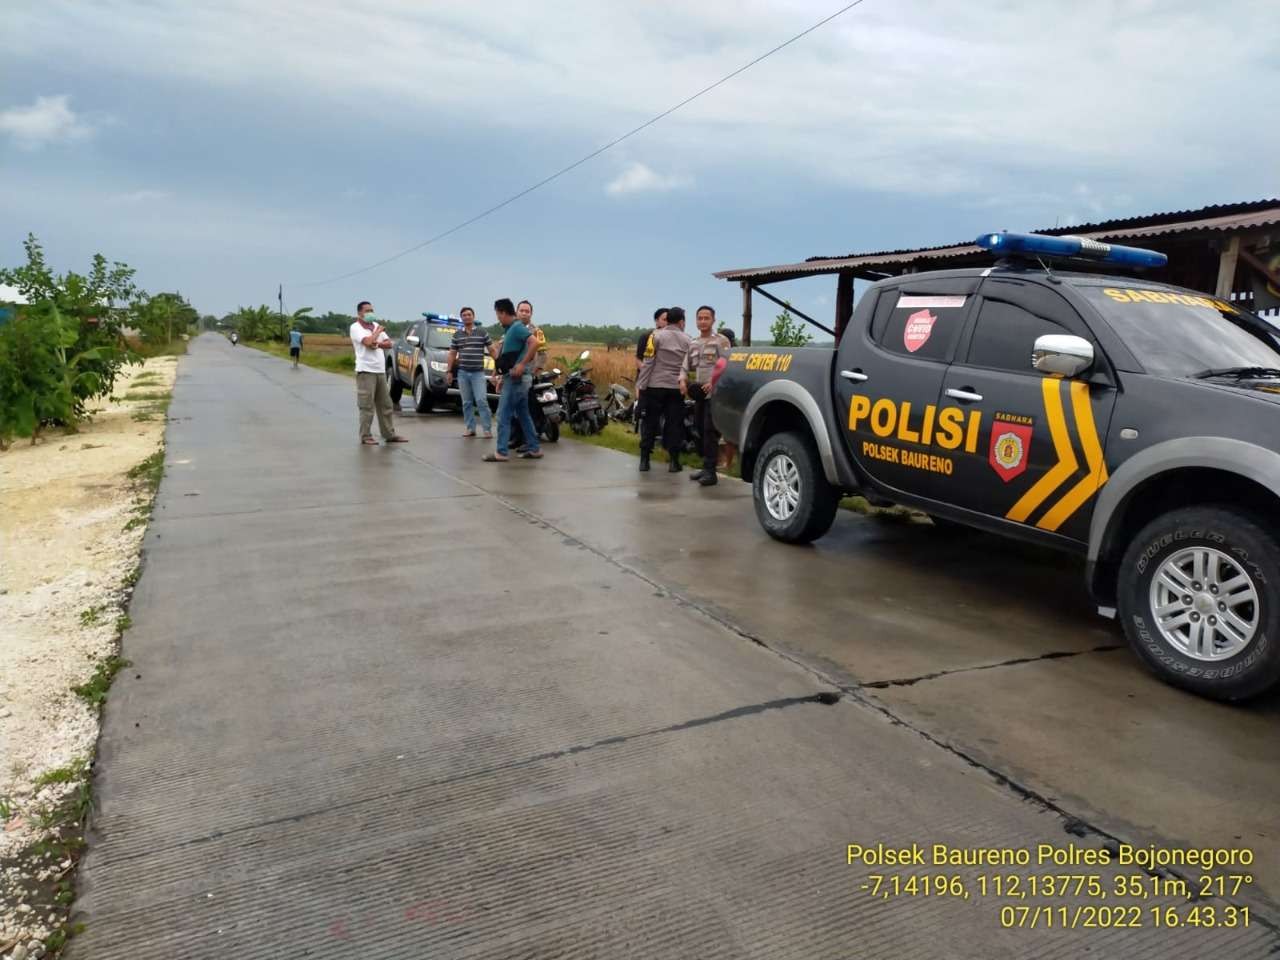 Jalan poros kecamatan di Baureno, yang kerap dijadikan balap liar, akhirnya dipatroli anggota Polsek Baureno, pada Selasa 8 November 2022. (Foto: Humas Polres Bojonegoro)